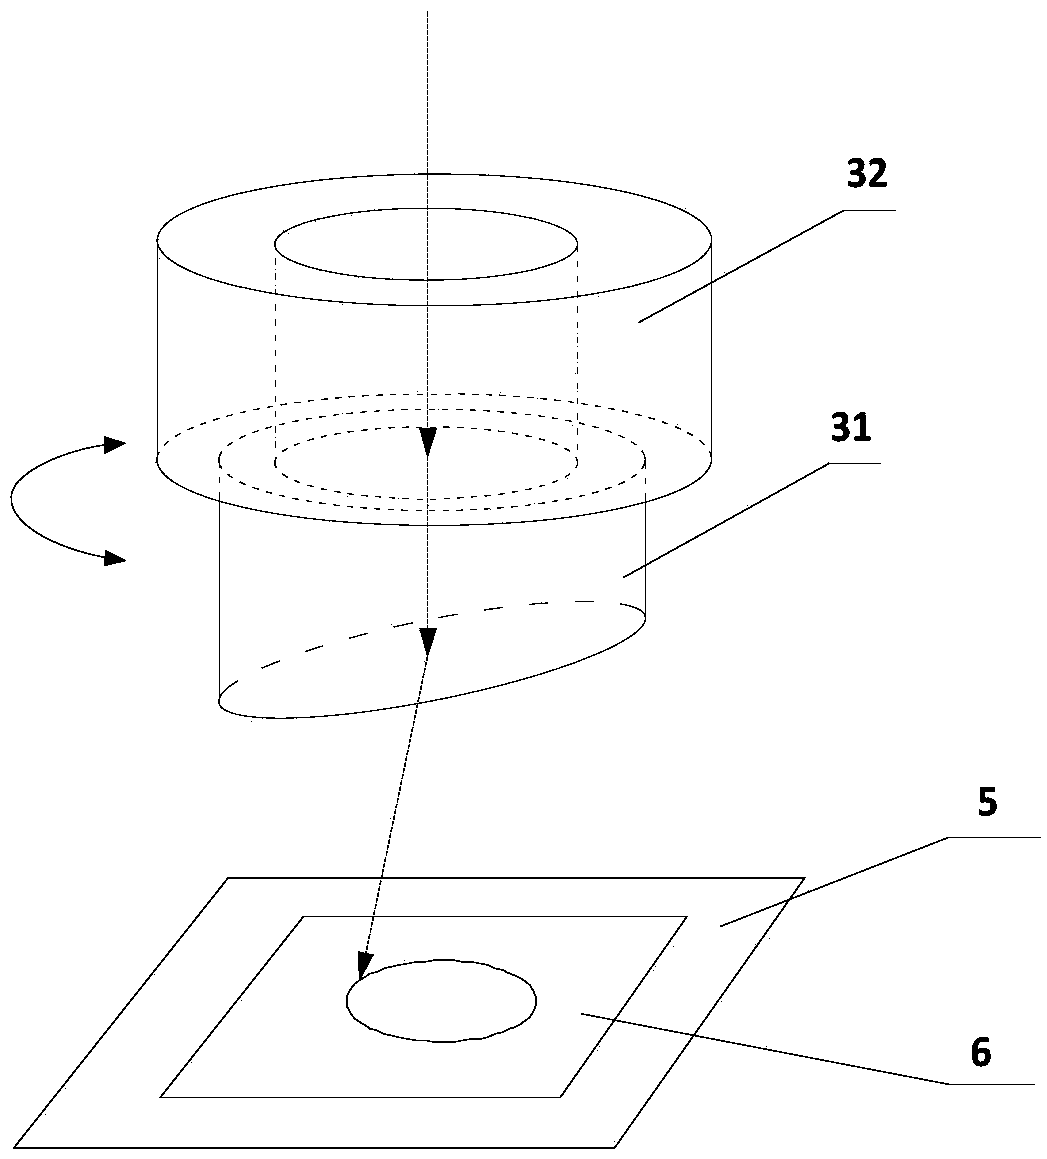 Laser processing system and laser processing method capable of adjusting line width